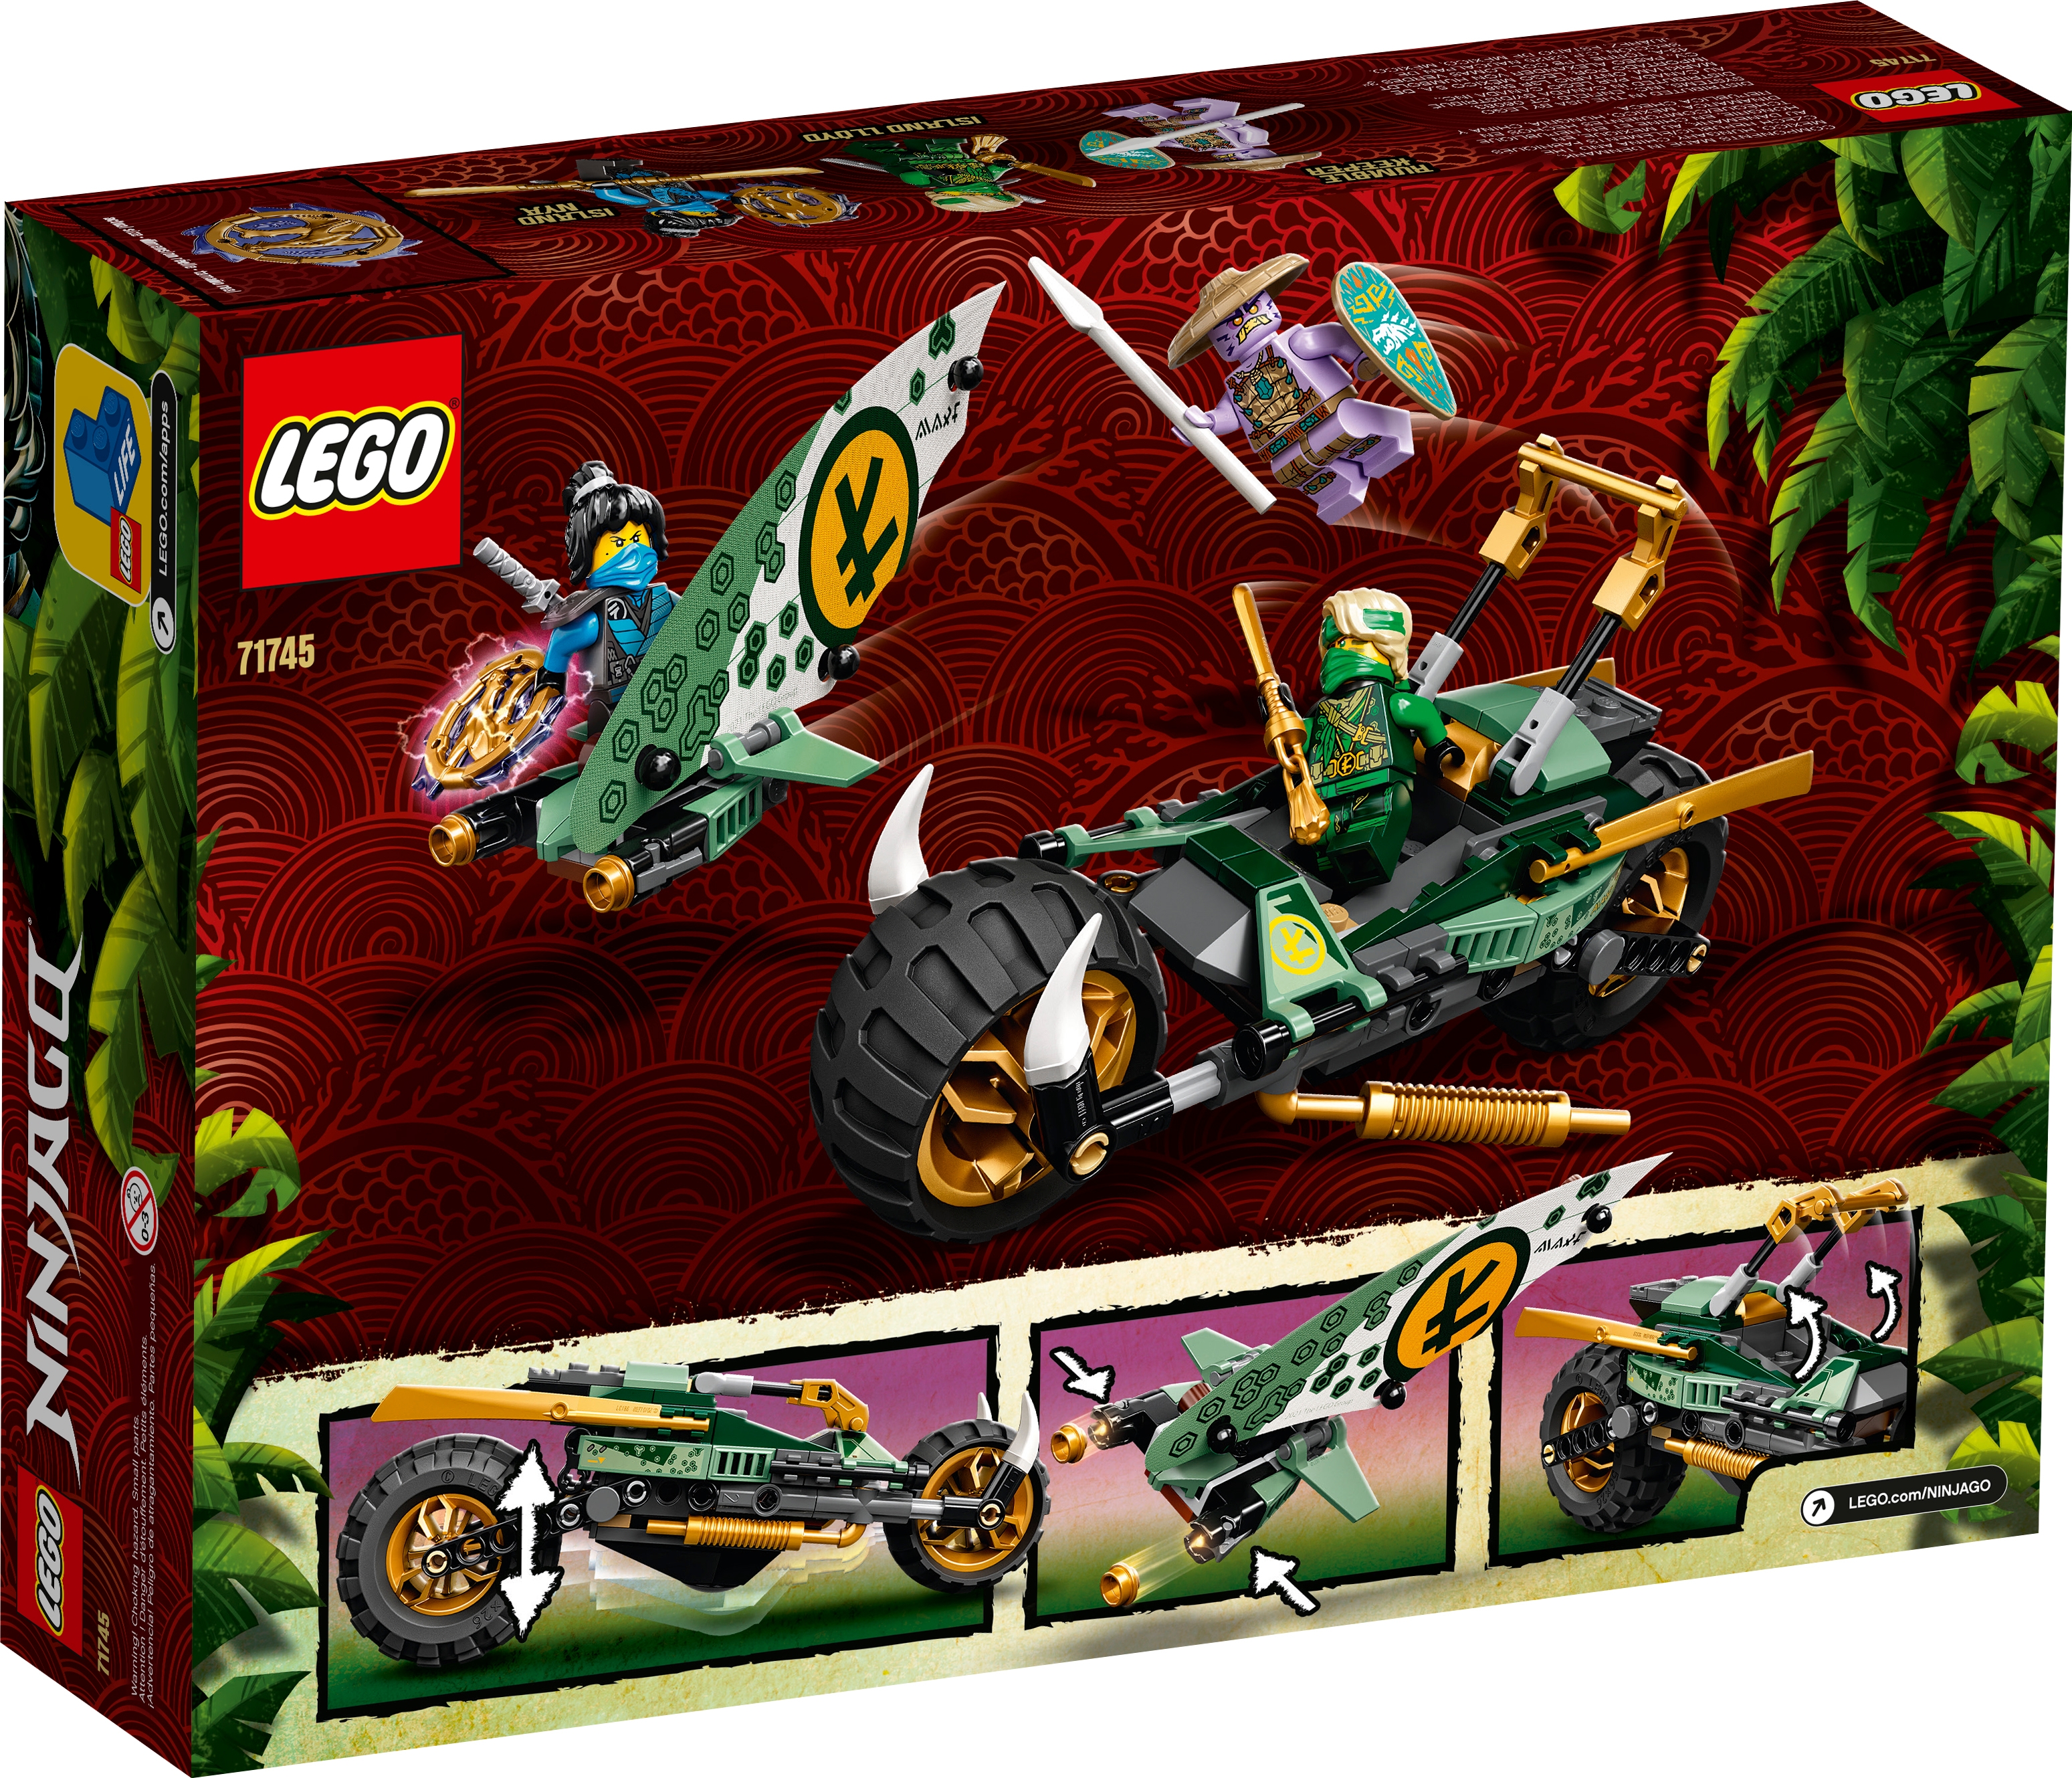 New 2021 LEGO NINJAGO Lloyd’s Jungle Chopper Bike 71745 Building Kit; Ninja Bike Toy Featuring NINJAGO Lloyd and NYA Minifigures 183 Pieces ; Top Toy for Kids Who Love Action-Packed Creative Play